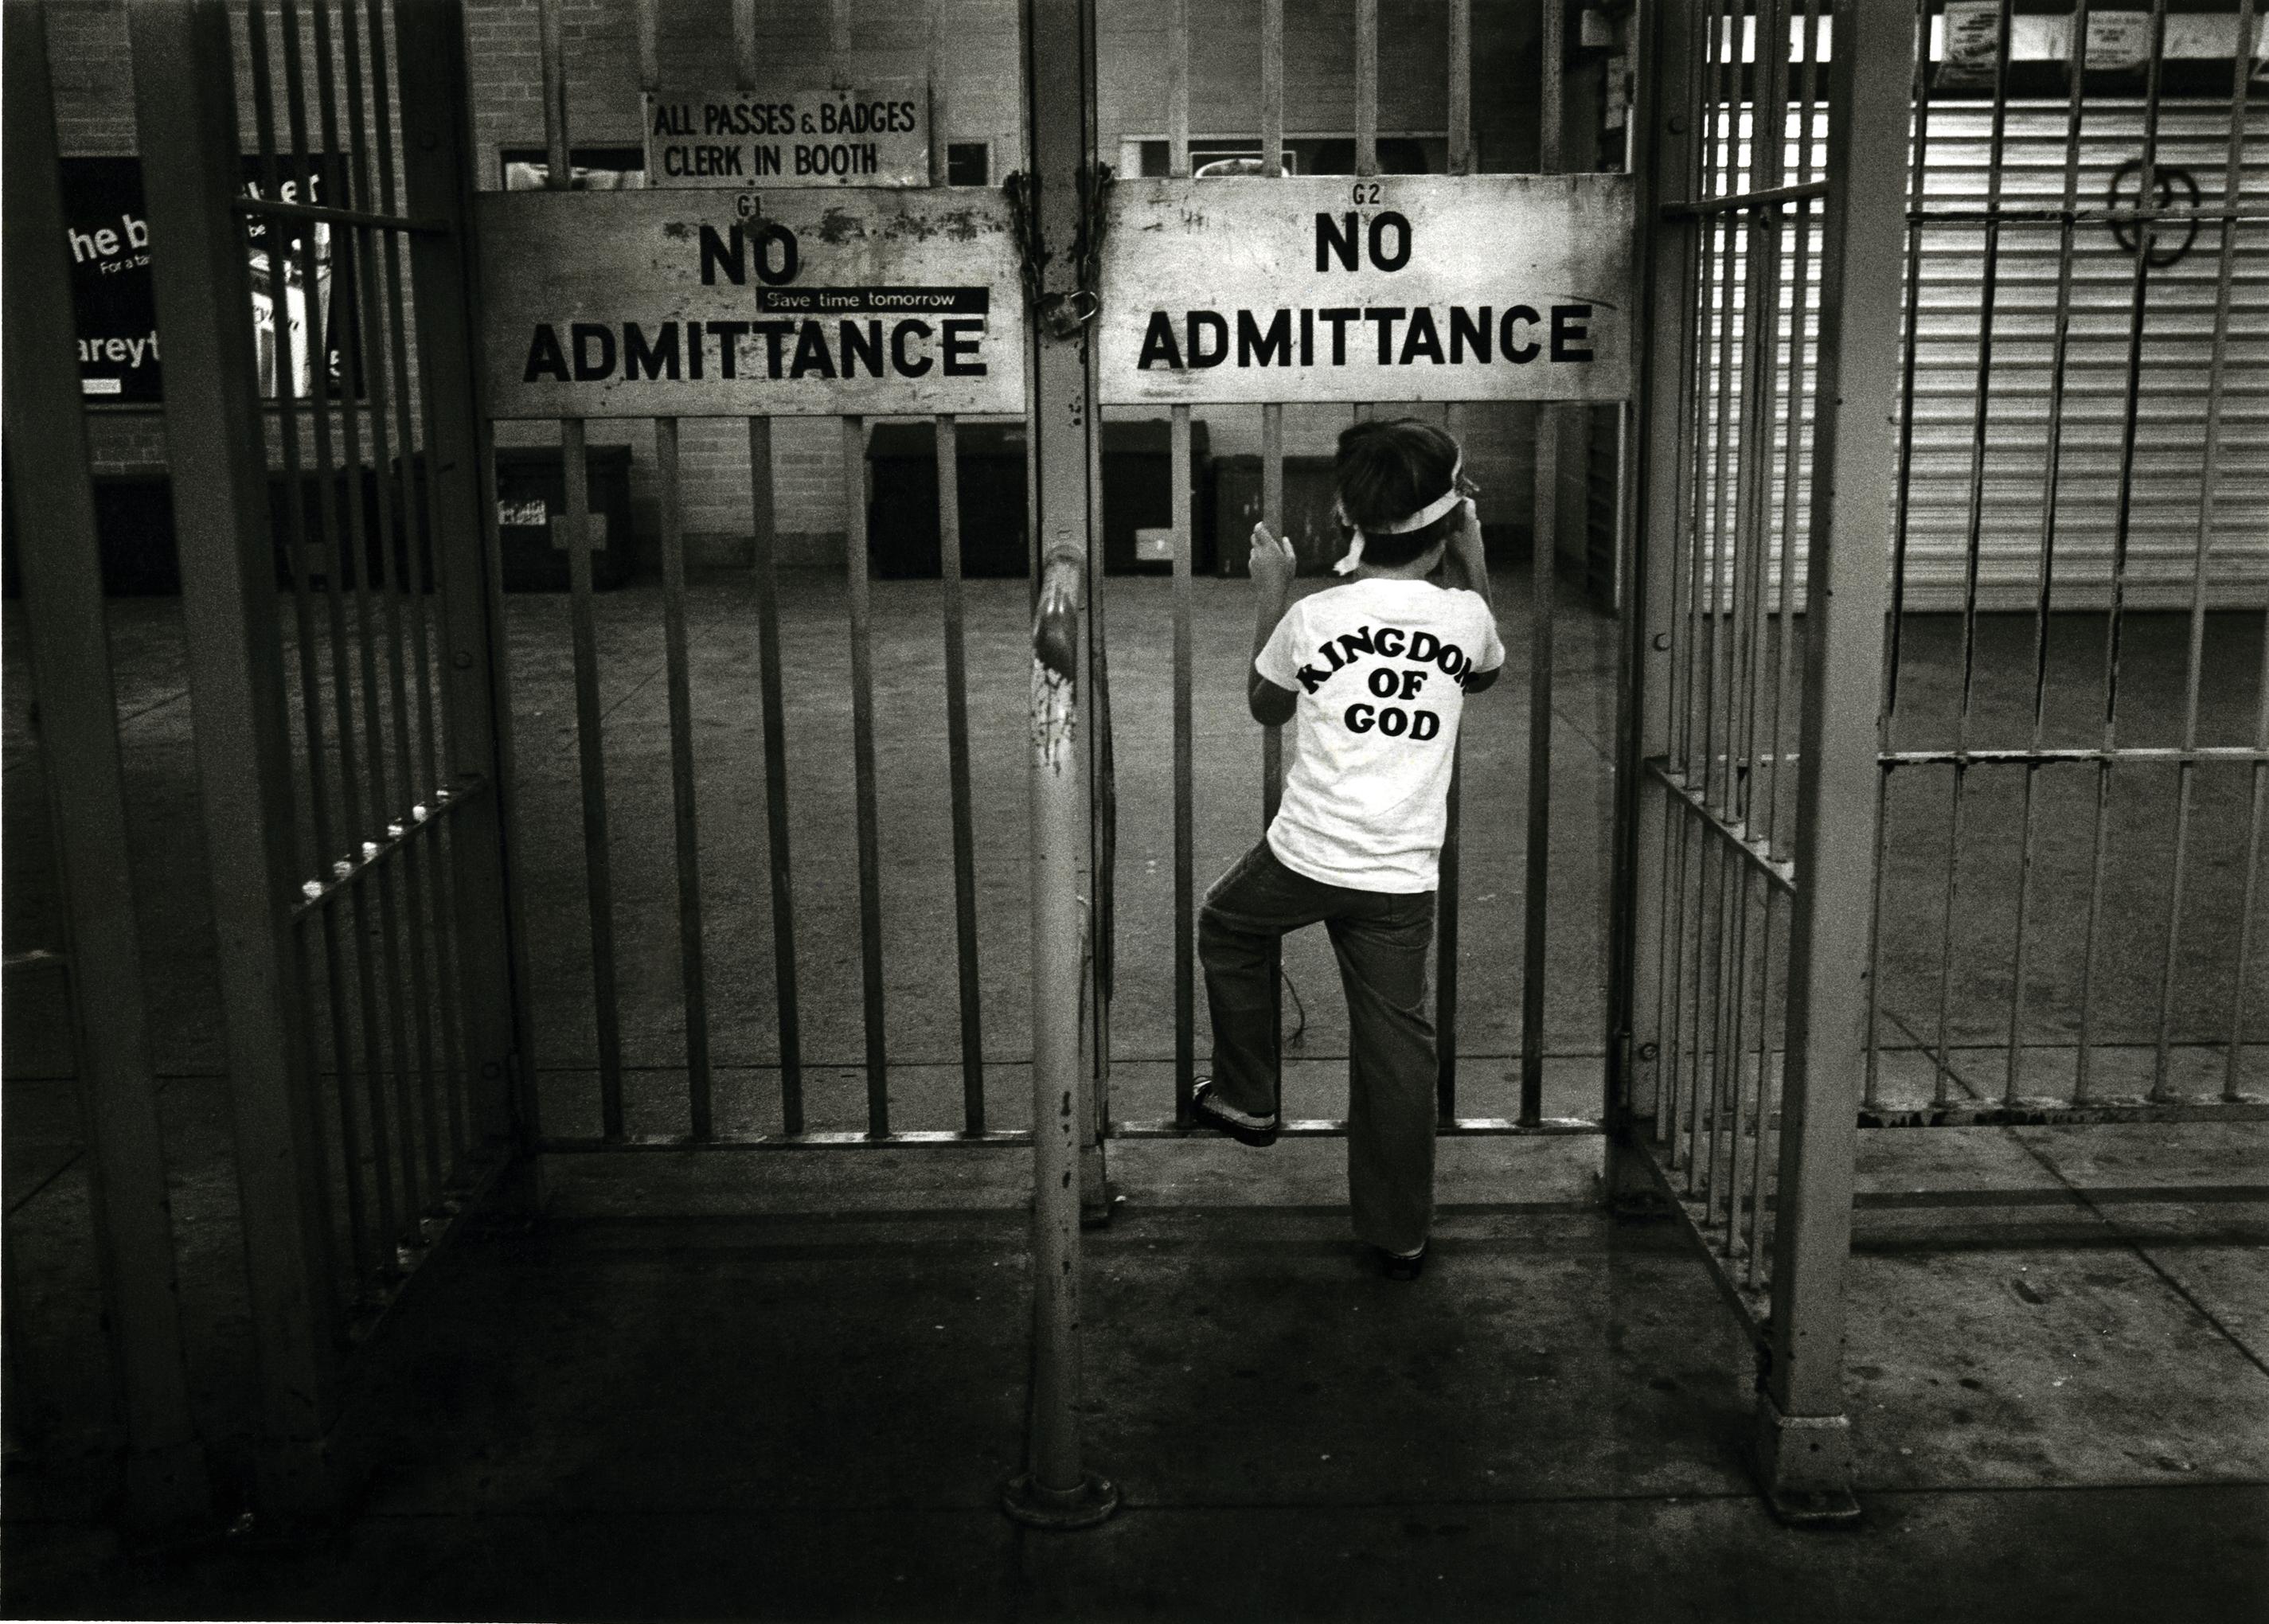 John Conn Figurative Photograph - Subway 34, Black & White, Limited Edition Photograph, NYC, 1981, Unframed, Kid